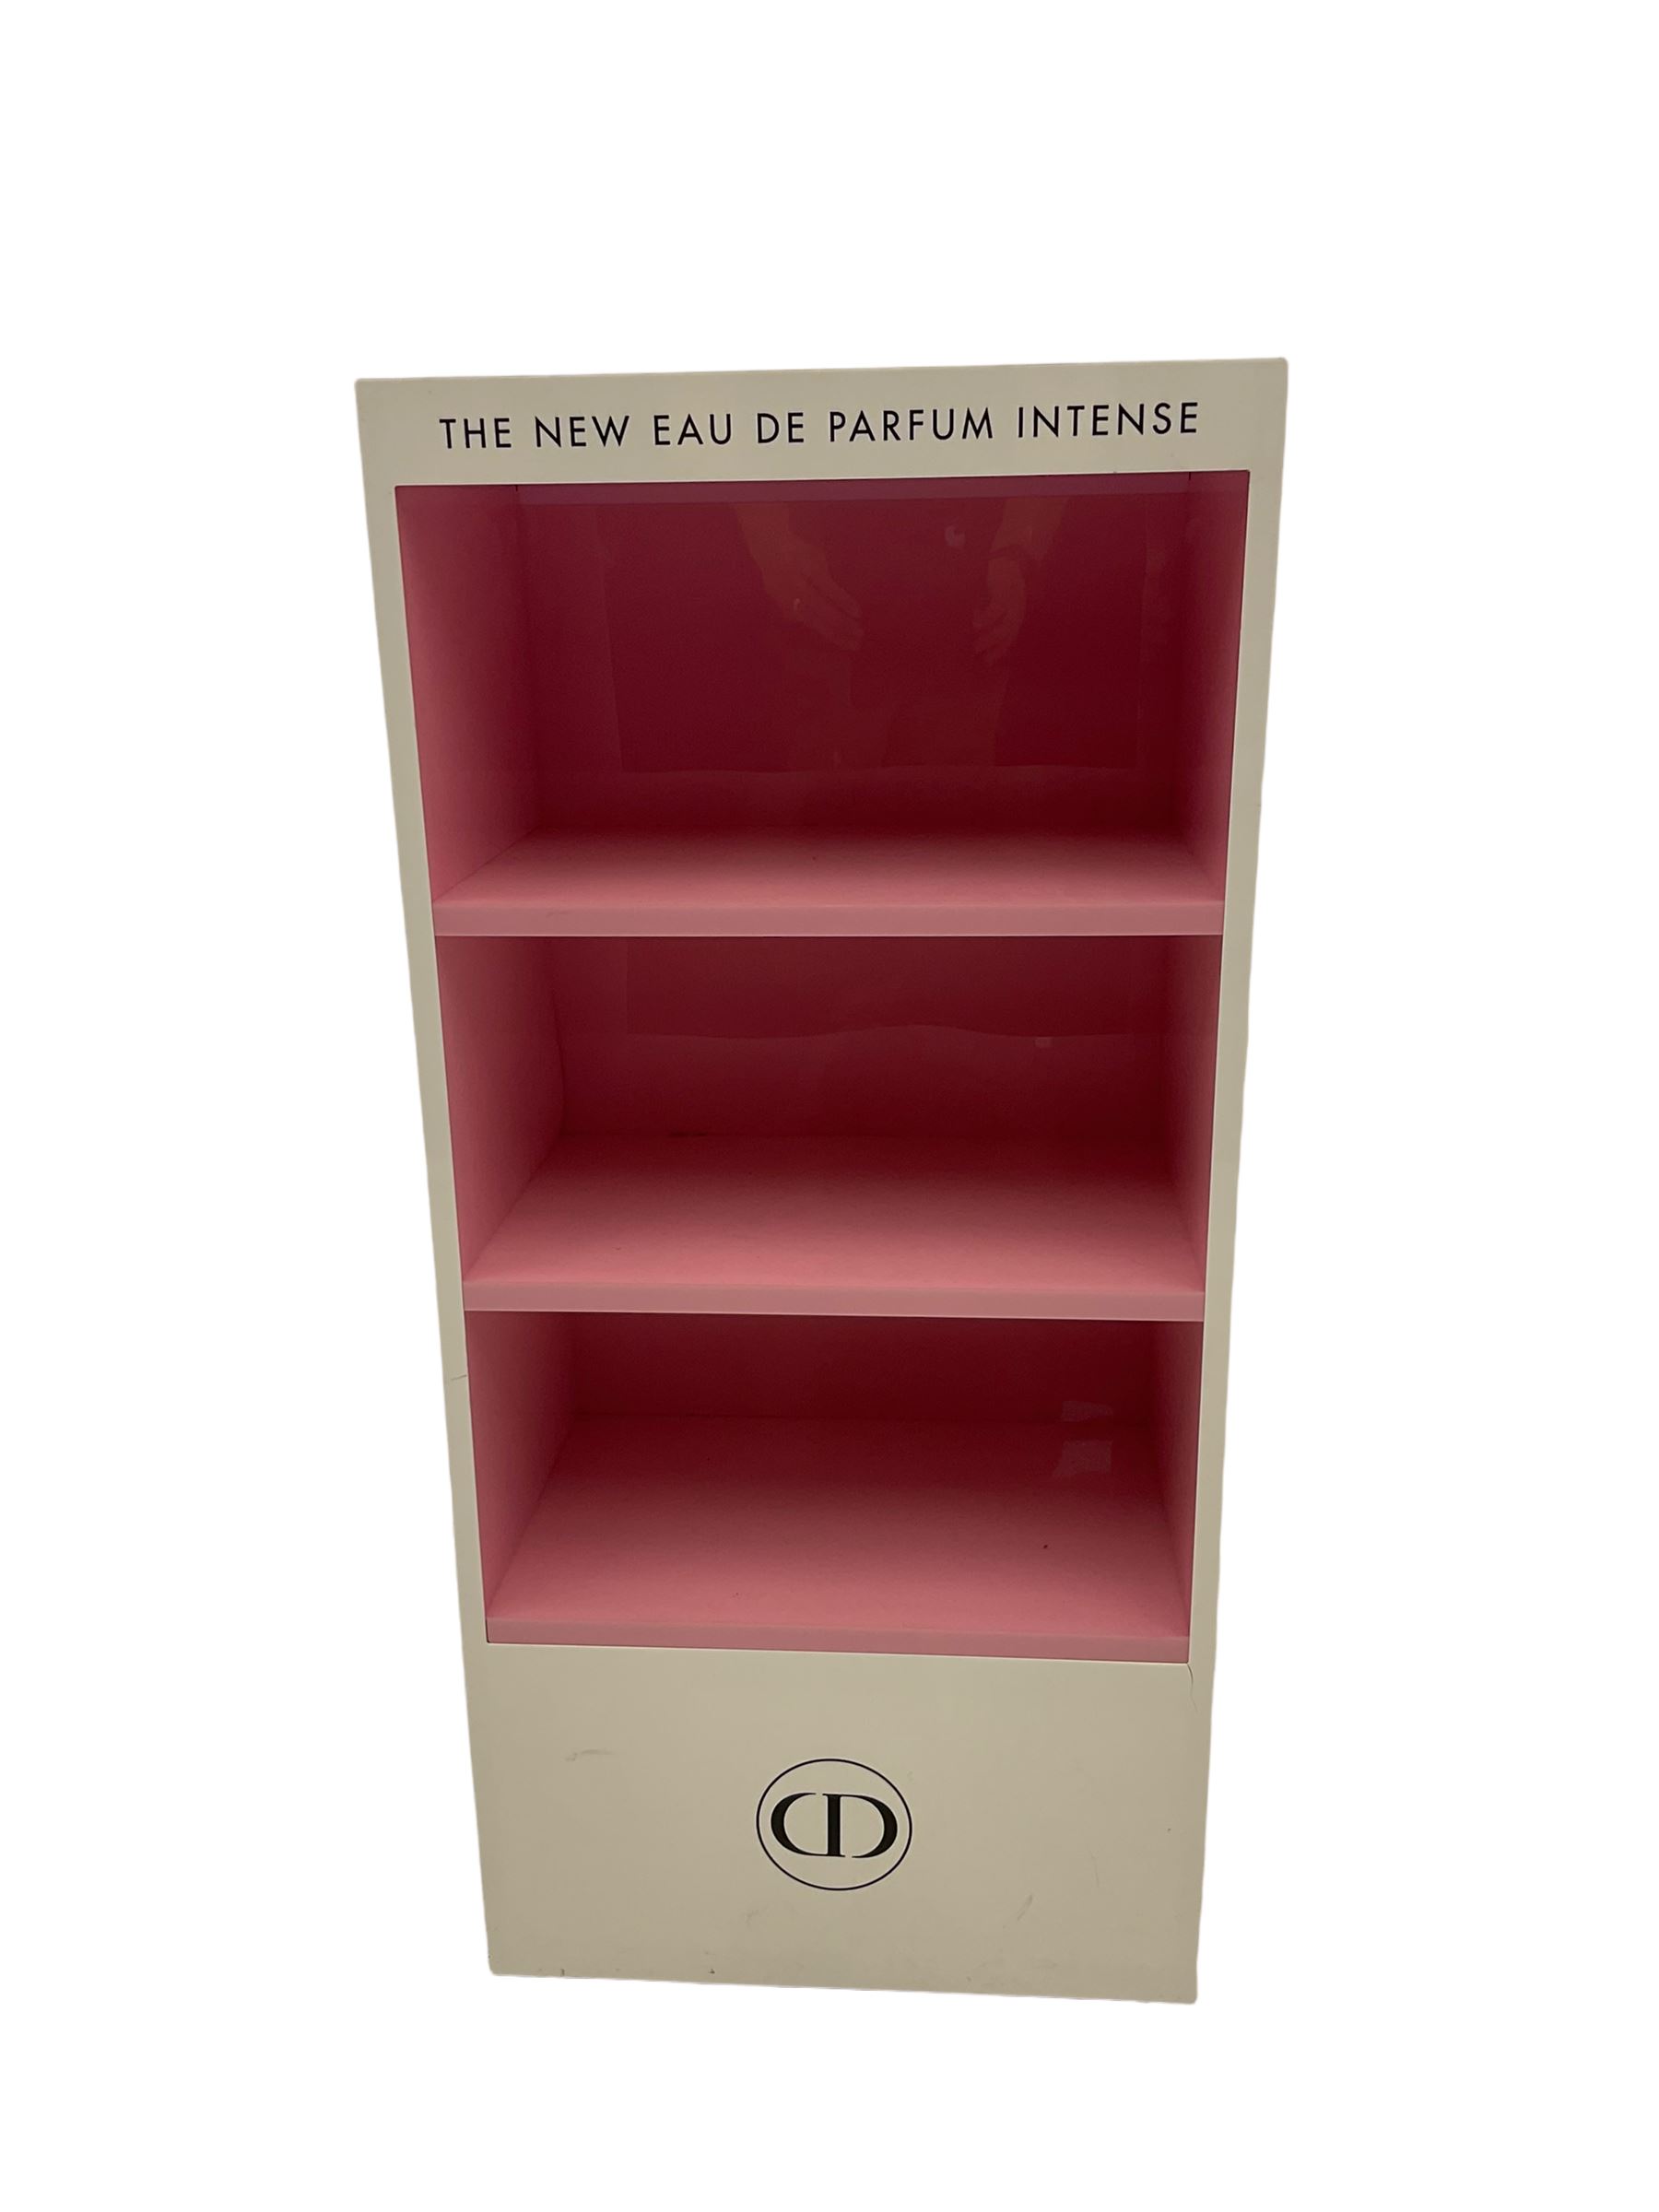 Christian Dior shop display stand - Image 5 of 6